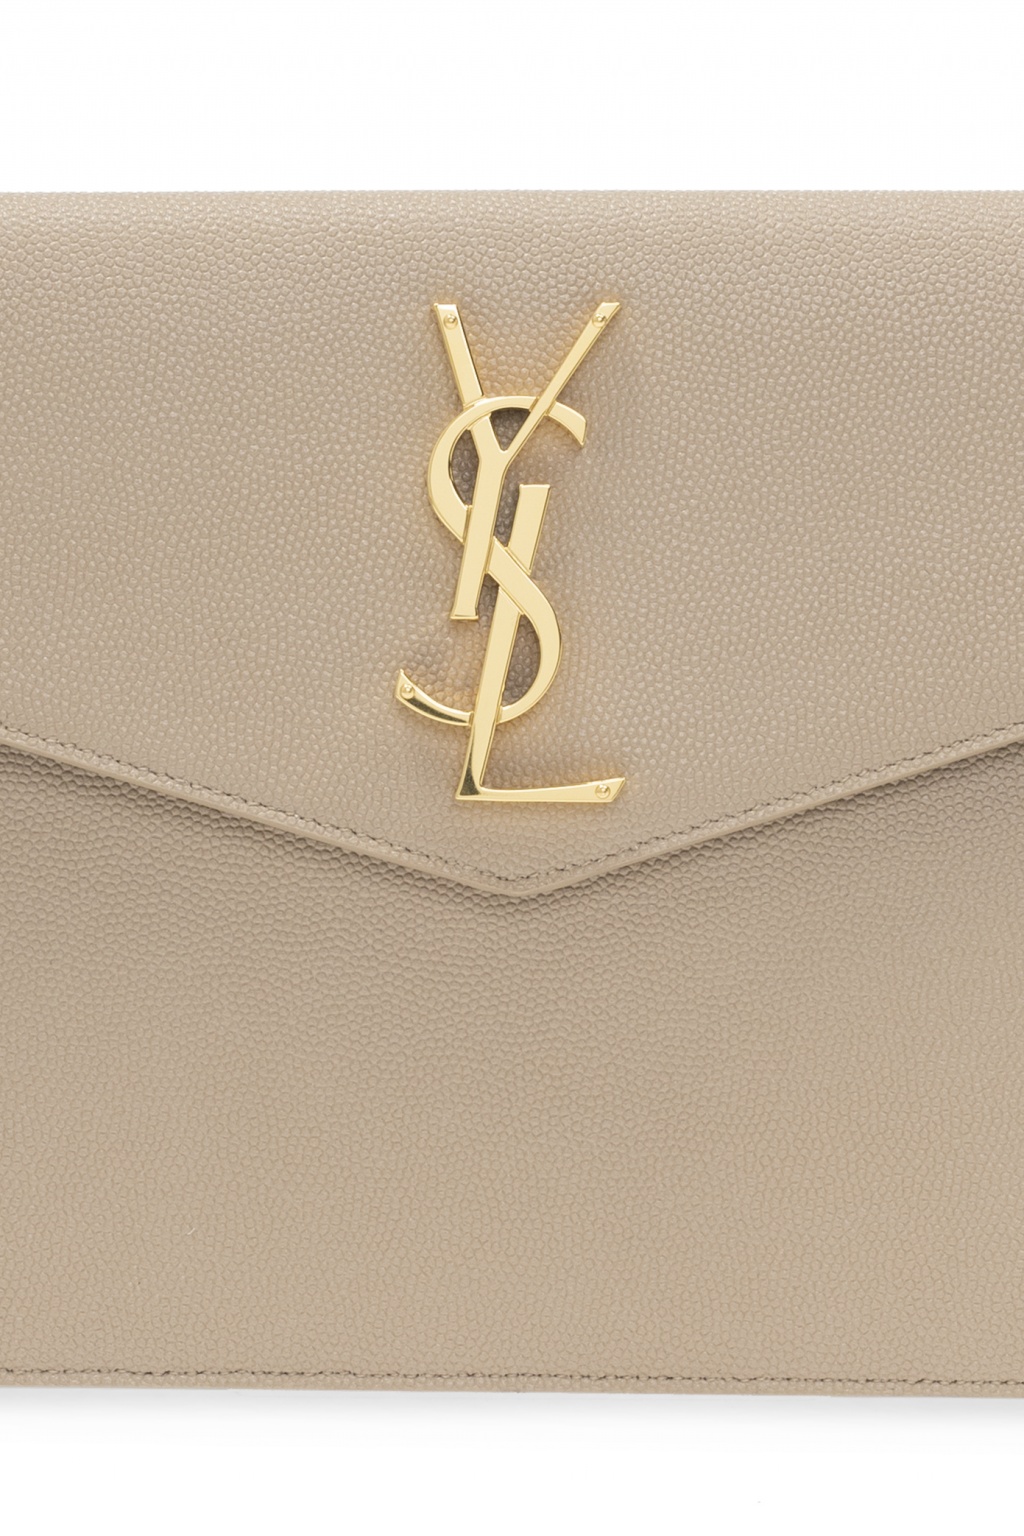 Saint Laurent 'Uptown' clutch with logo | Women's Bags | Vitkac